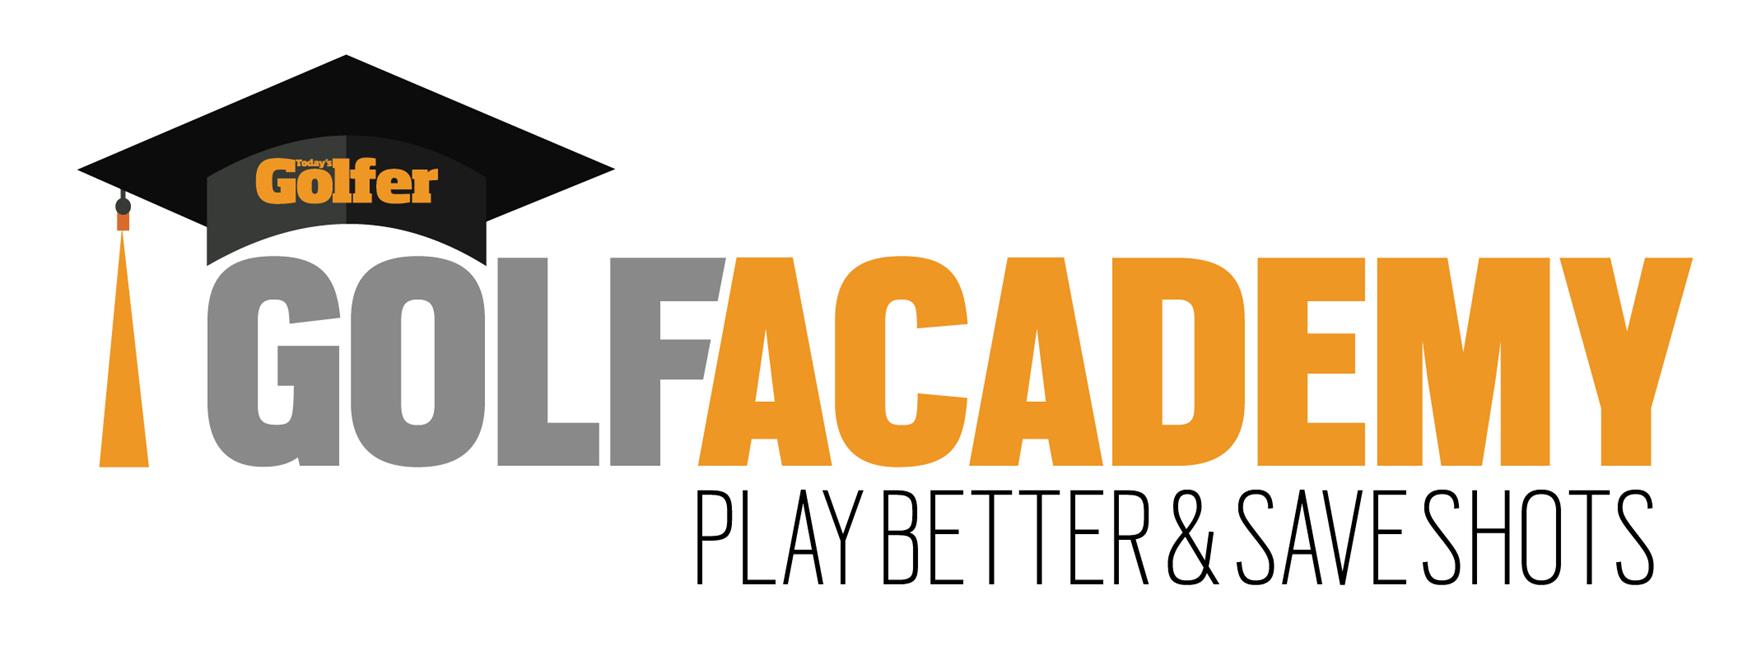 Golf Academy Logo